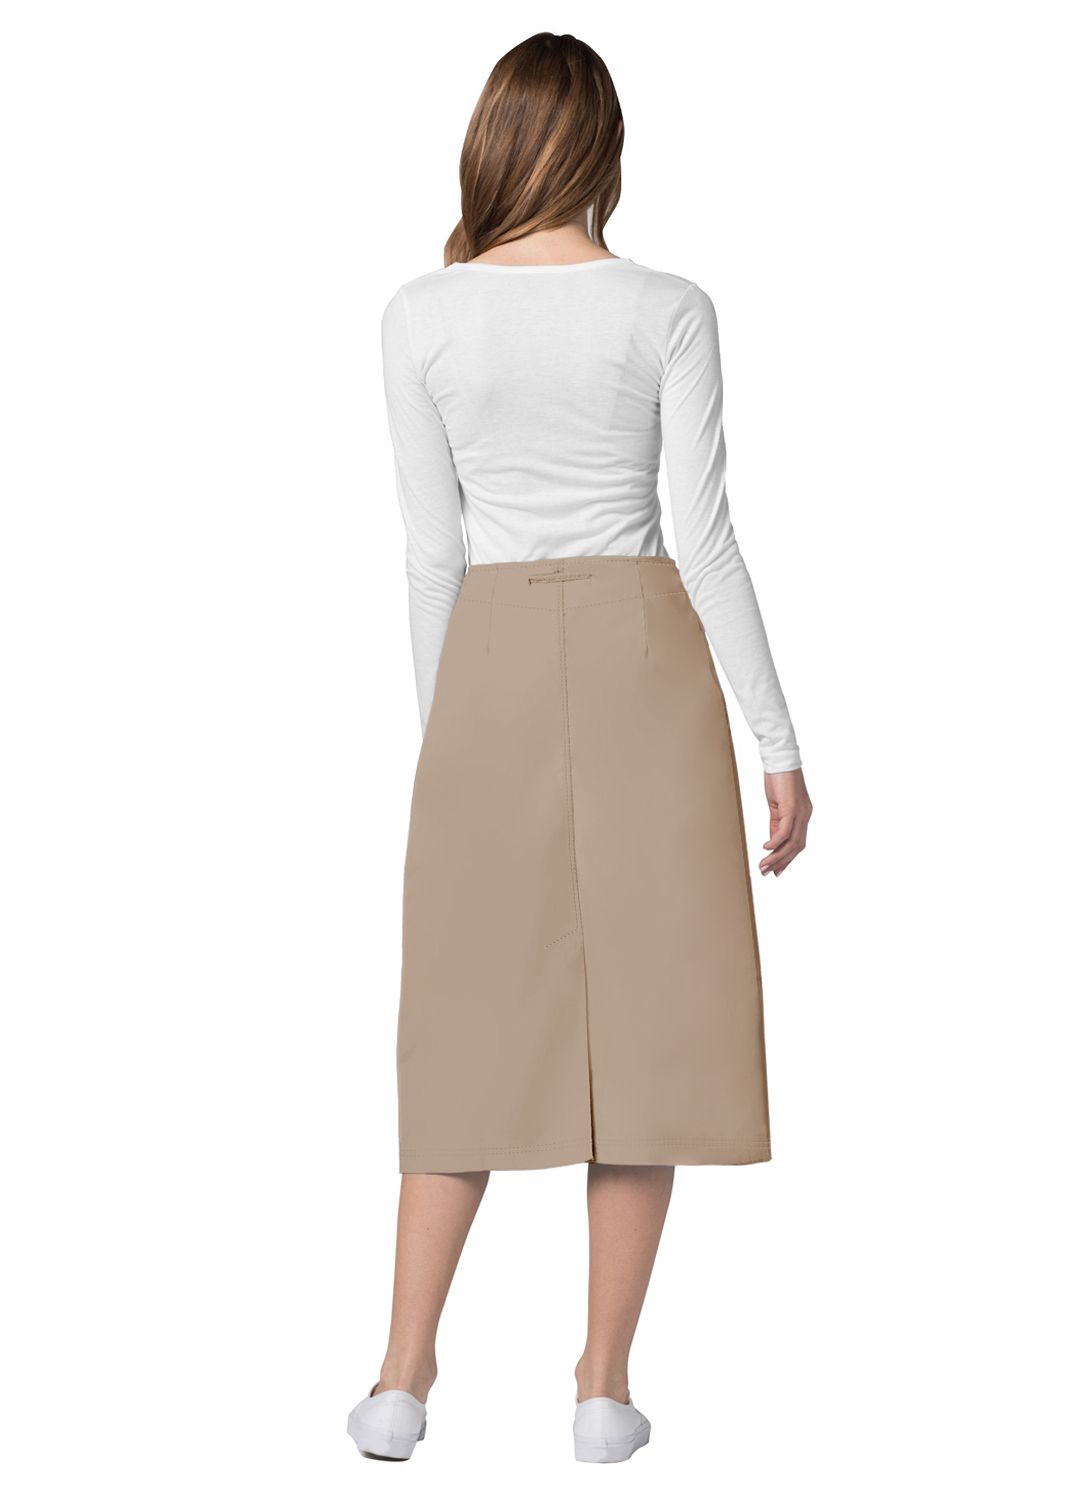 Mid-Calf Length Drawstring Skirt by Adar 6-24 / Khaki